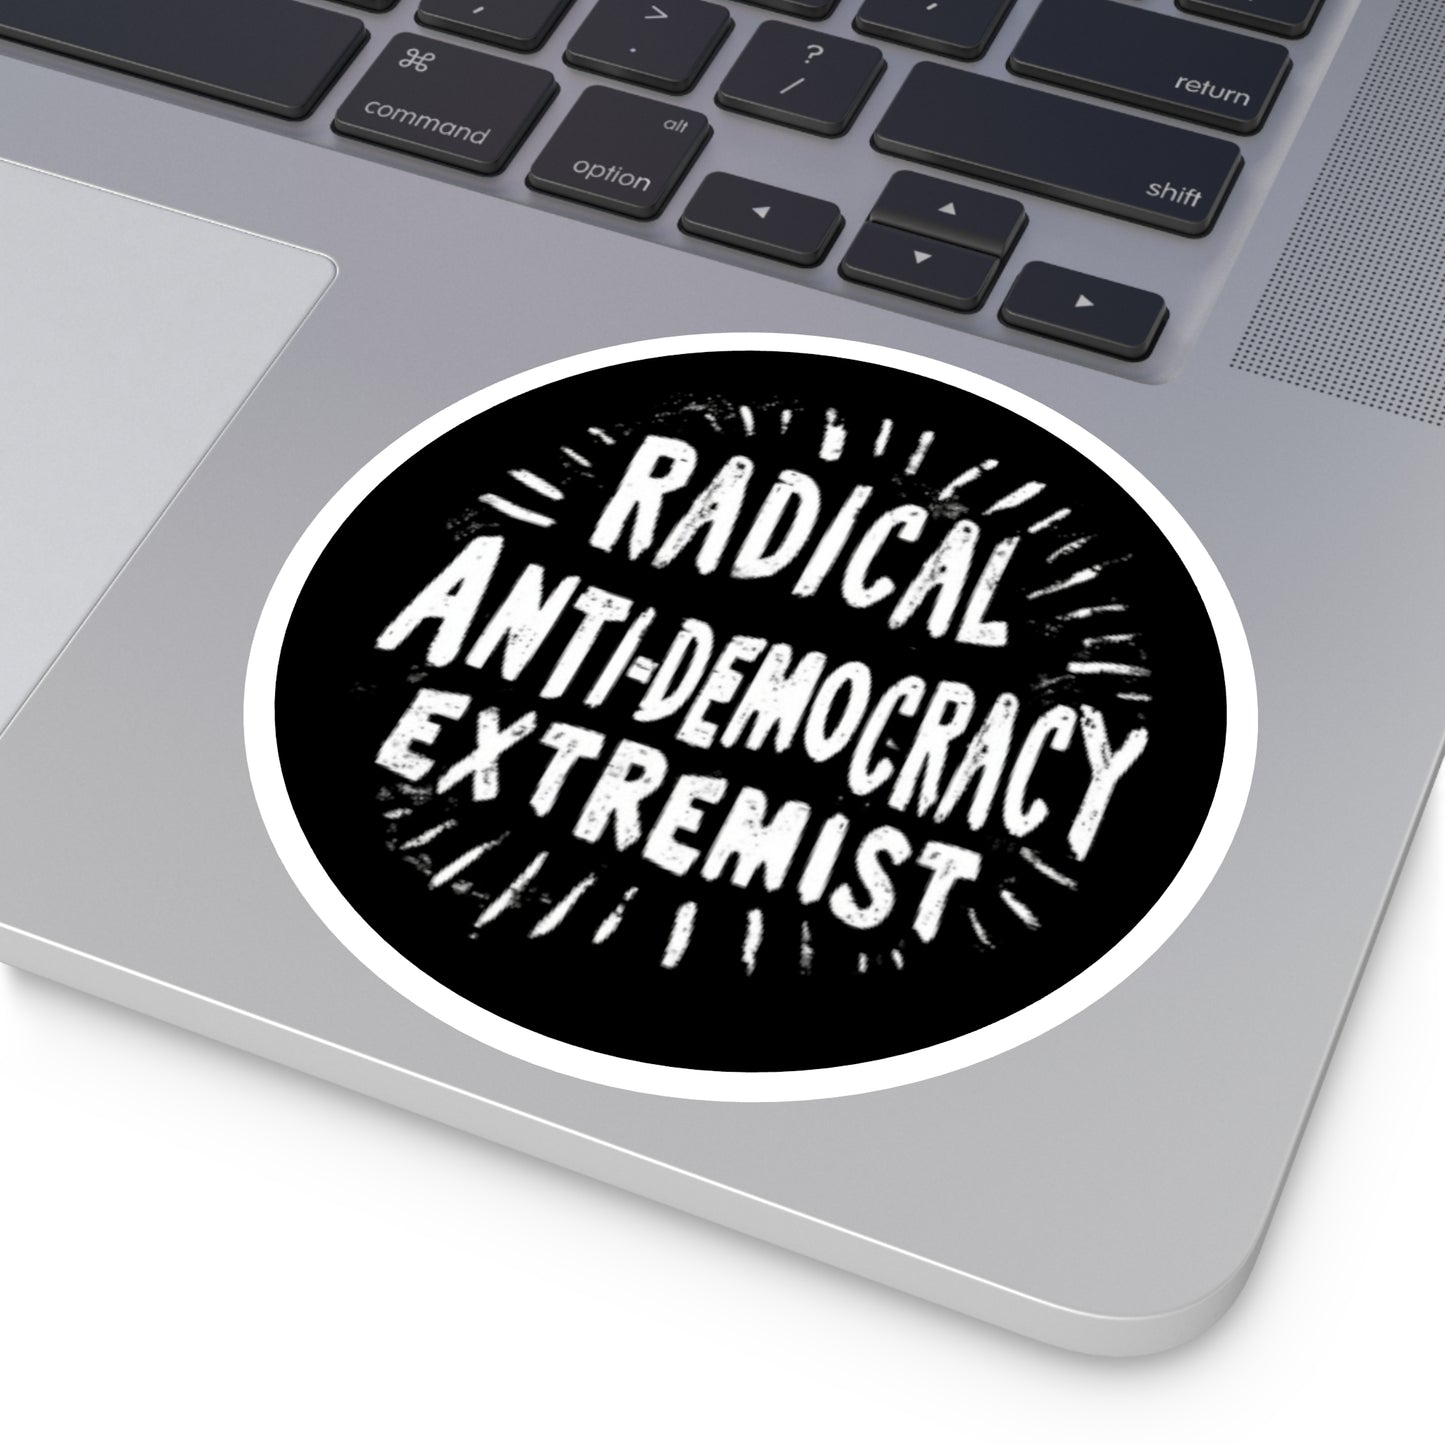 Radical Anti-Democracy Extremist Round Stickers, Indoor\Outdoor